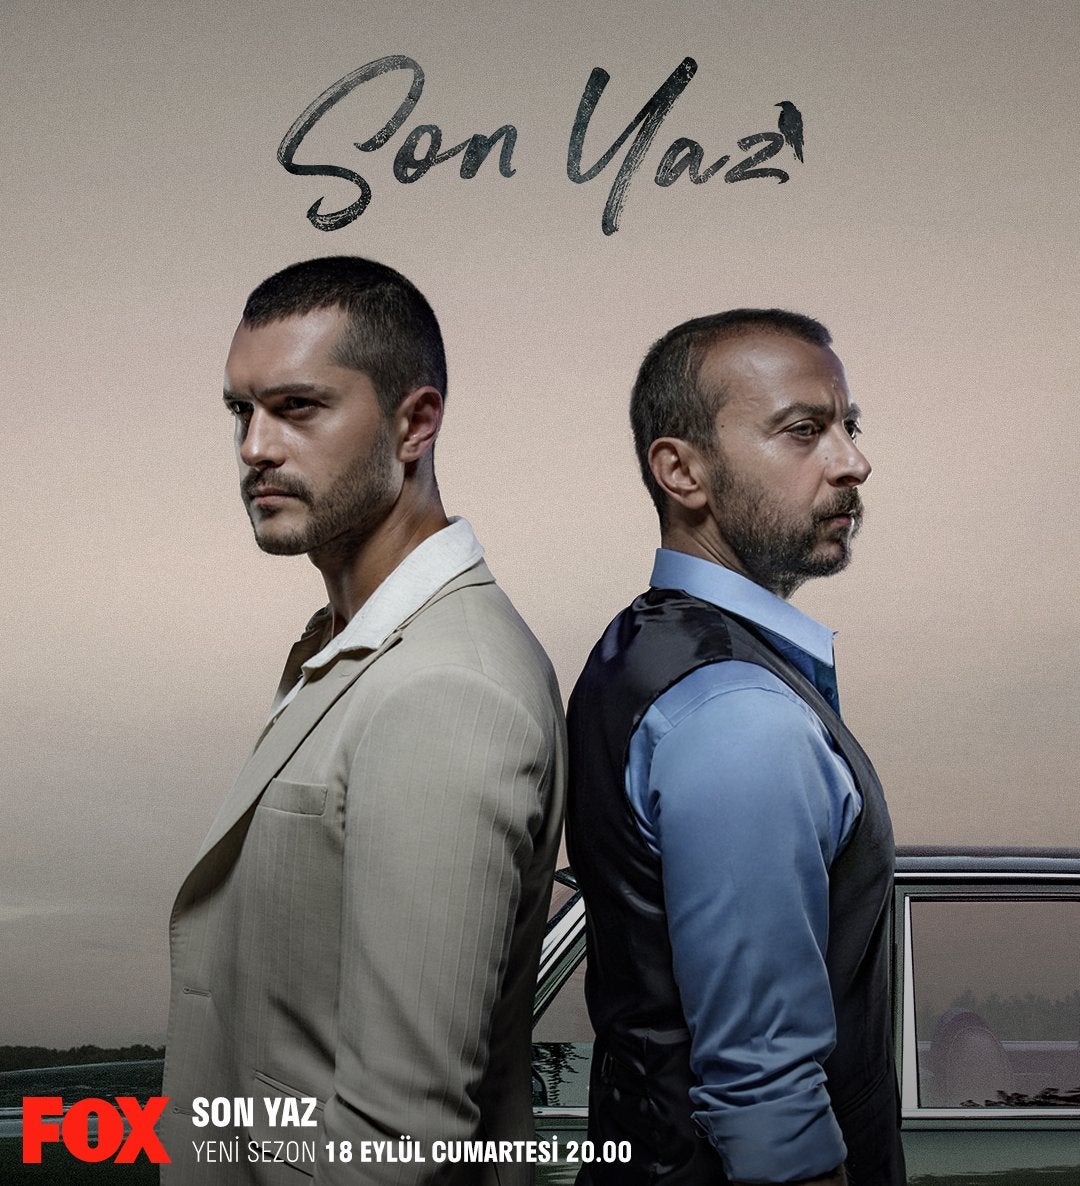 TV ratings for Last Summer (Son Yaz) in Spain. FOX TV series